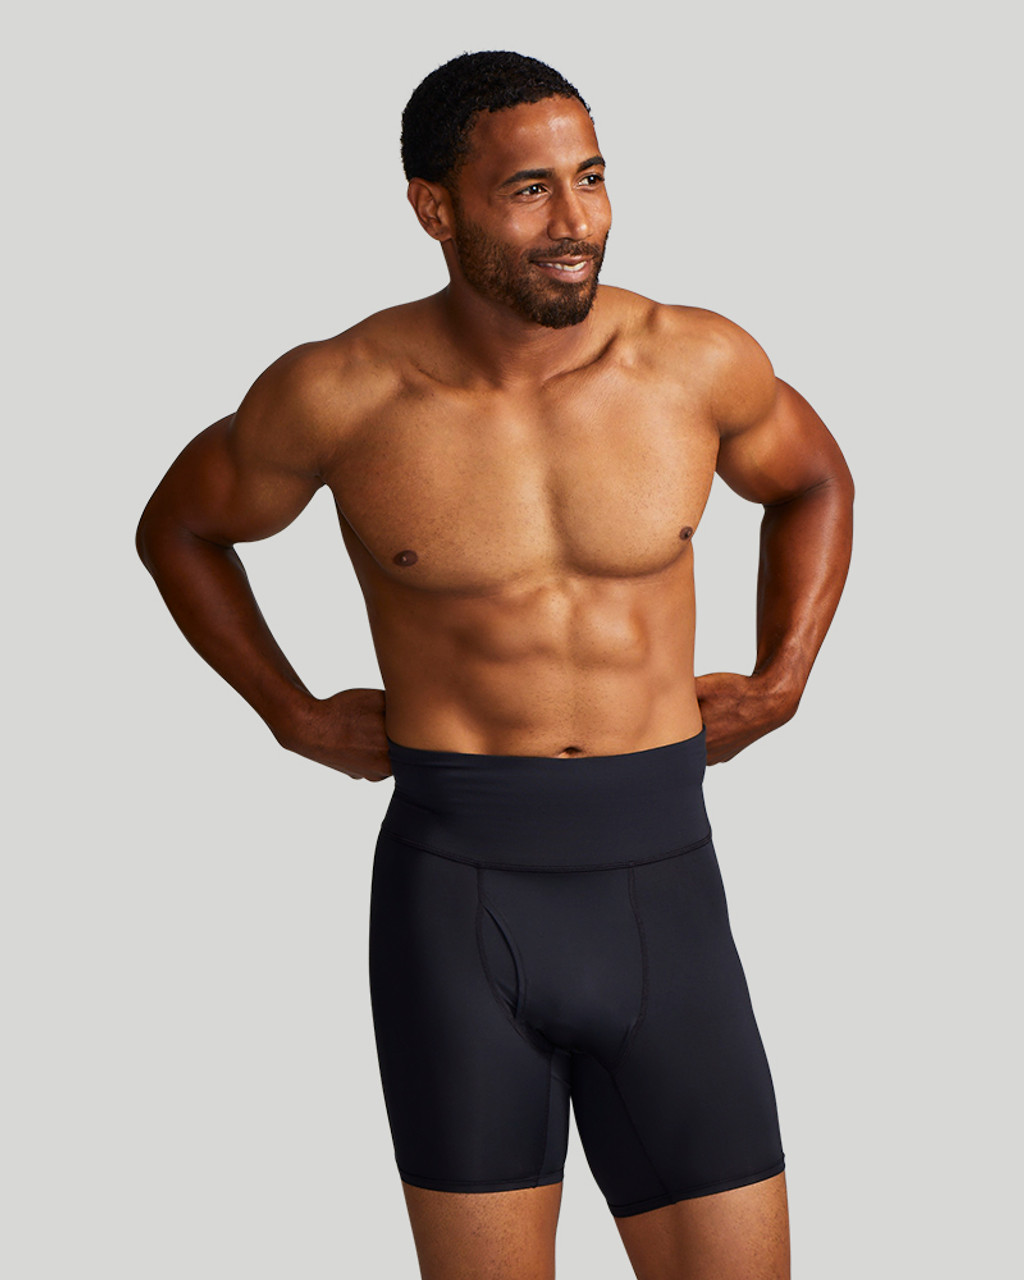 Men's Support Underwear  Shop Pain Relief at Tommie Copper®